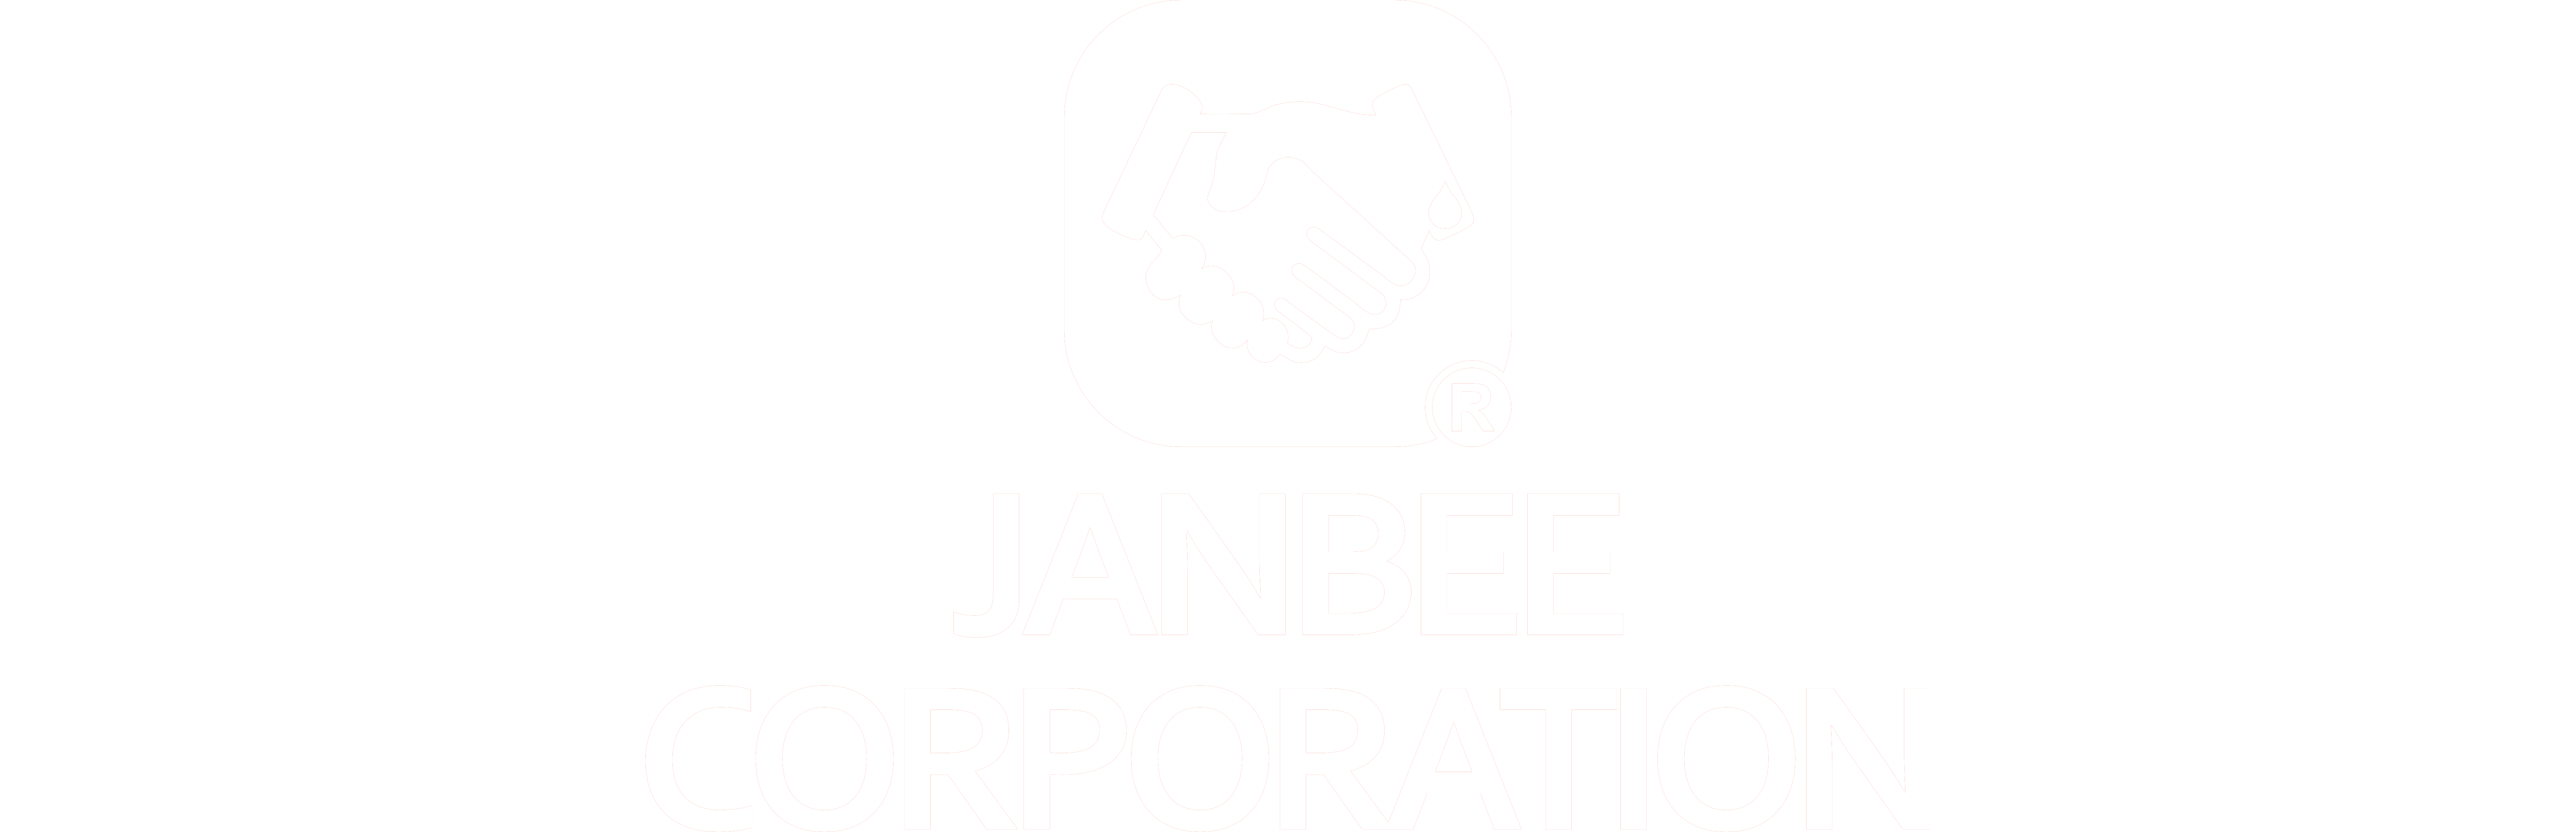 JANBEE CORPORATION